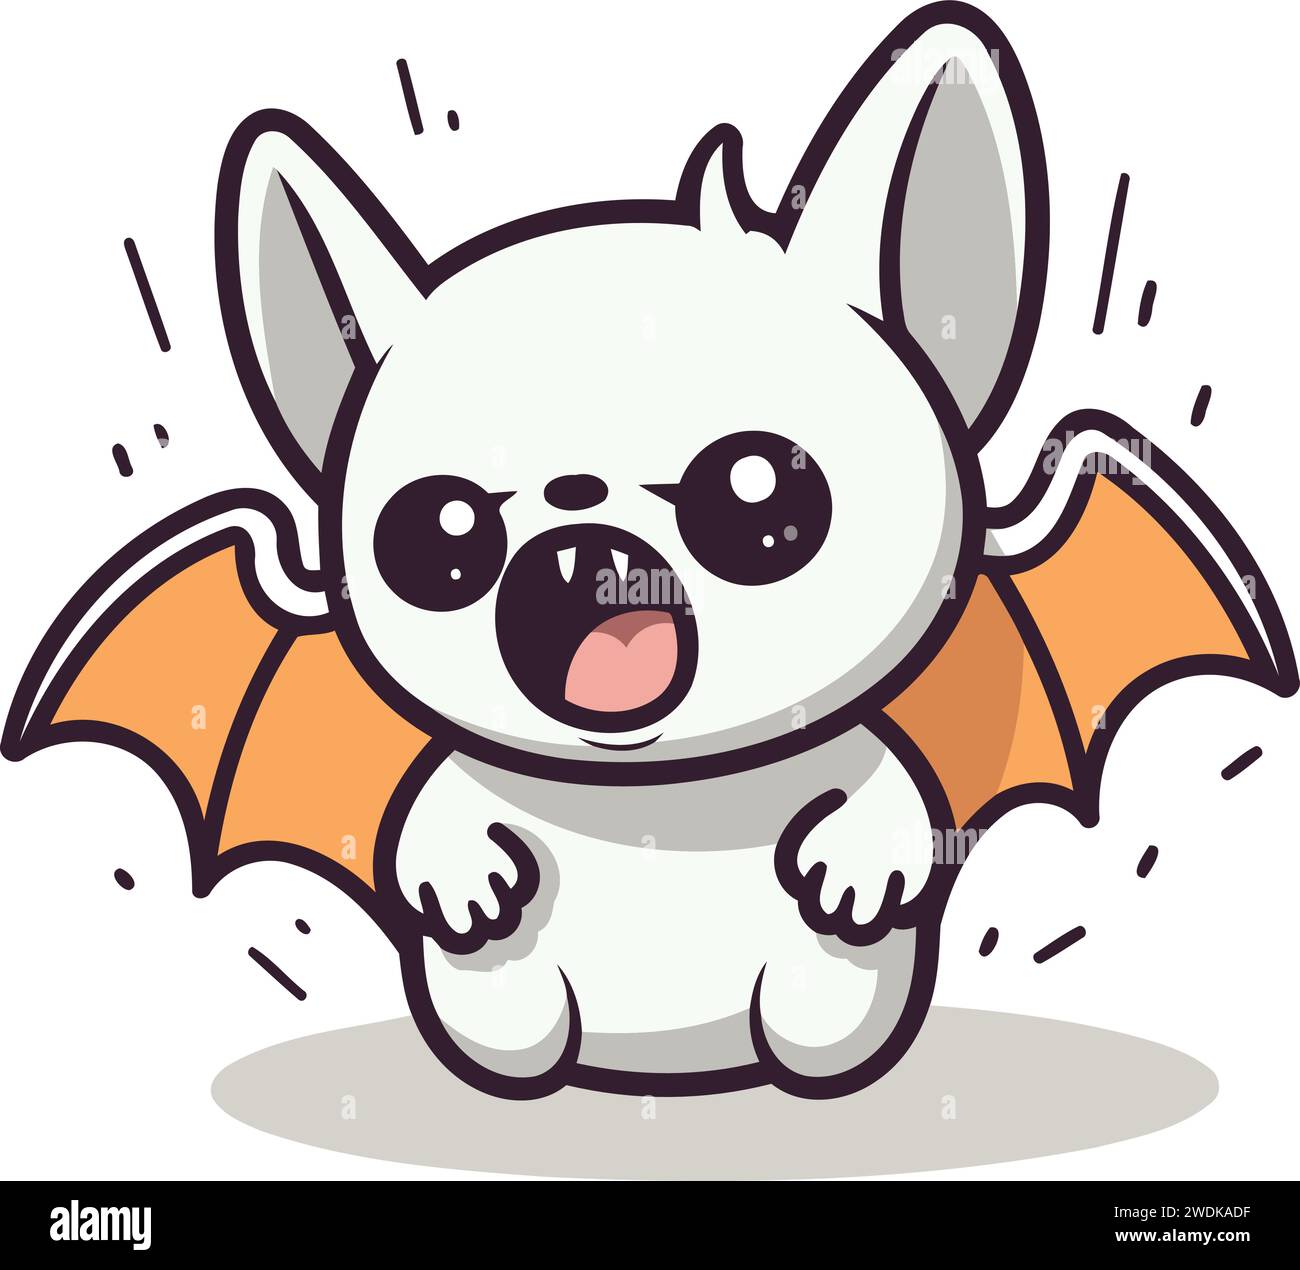 Cute cartoon french bulldog with bat wings. Vector illustration. Stock Vector